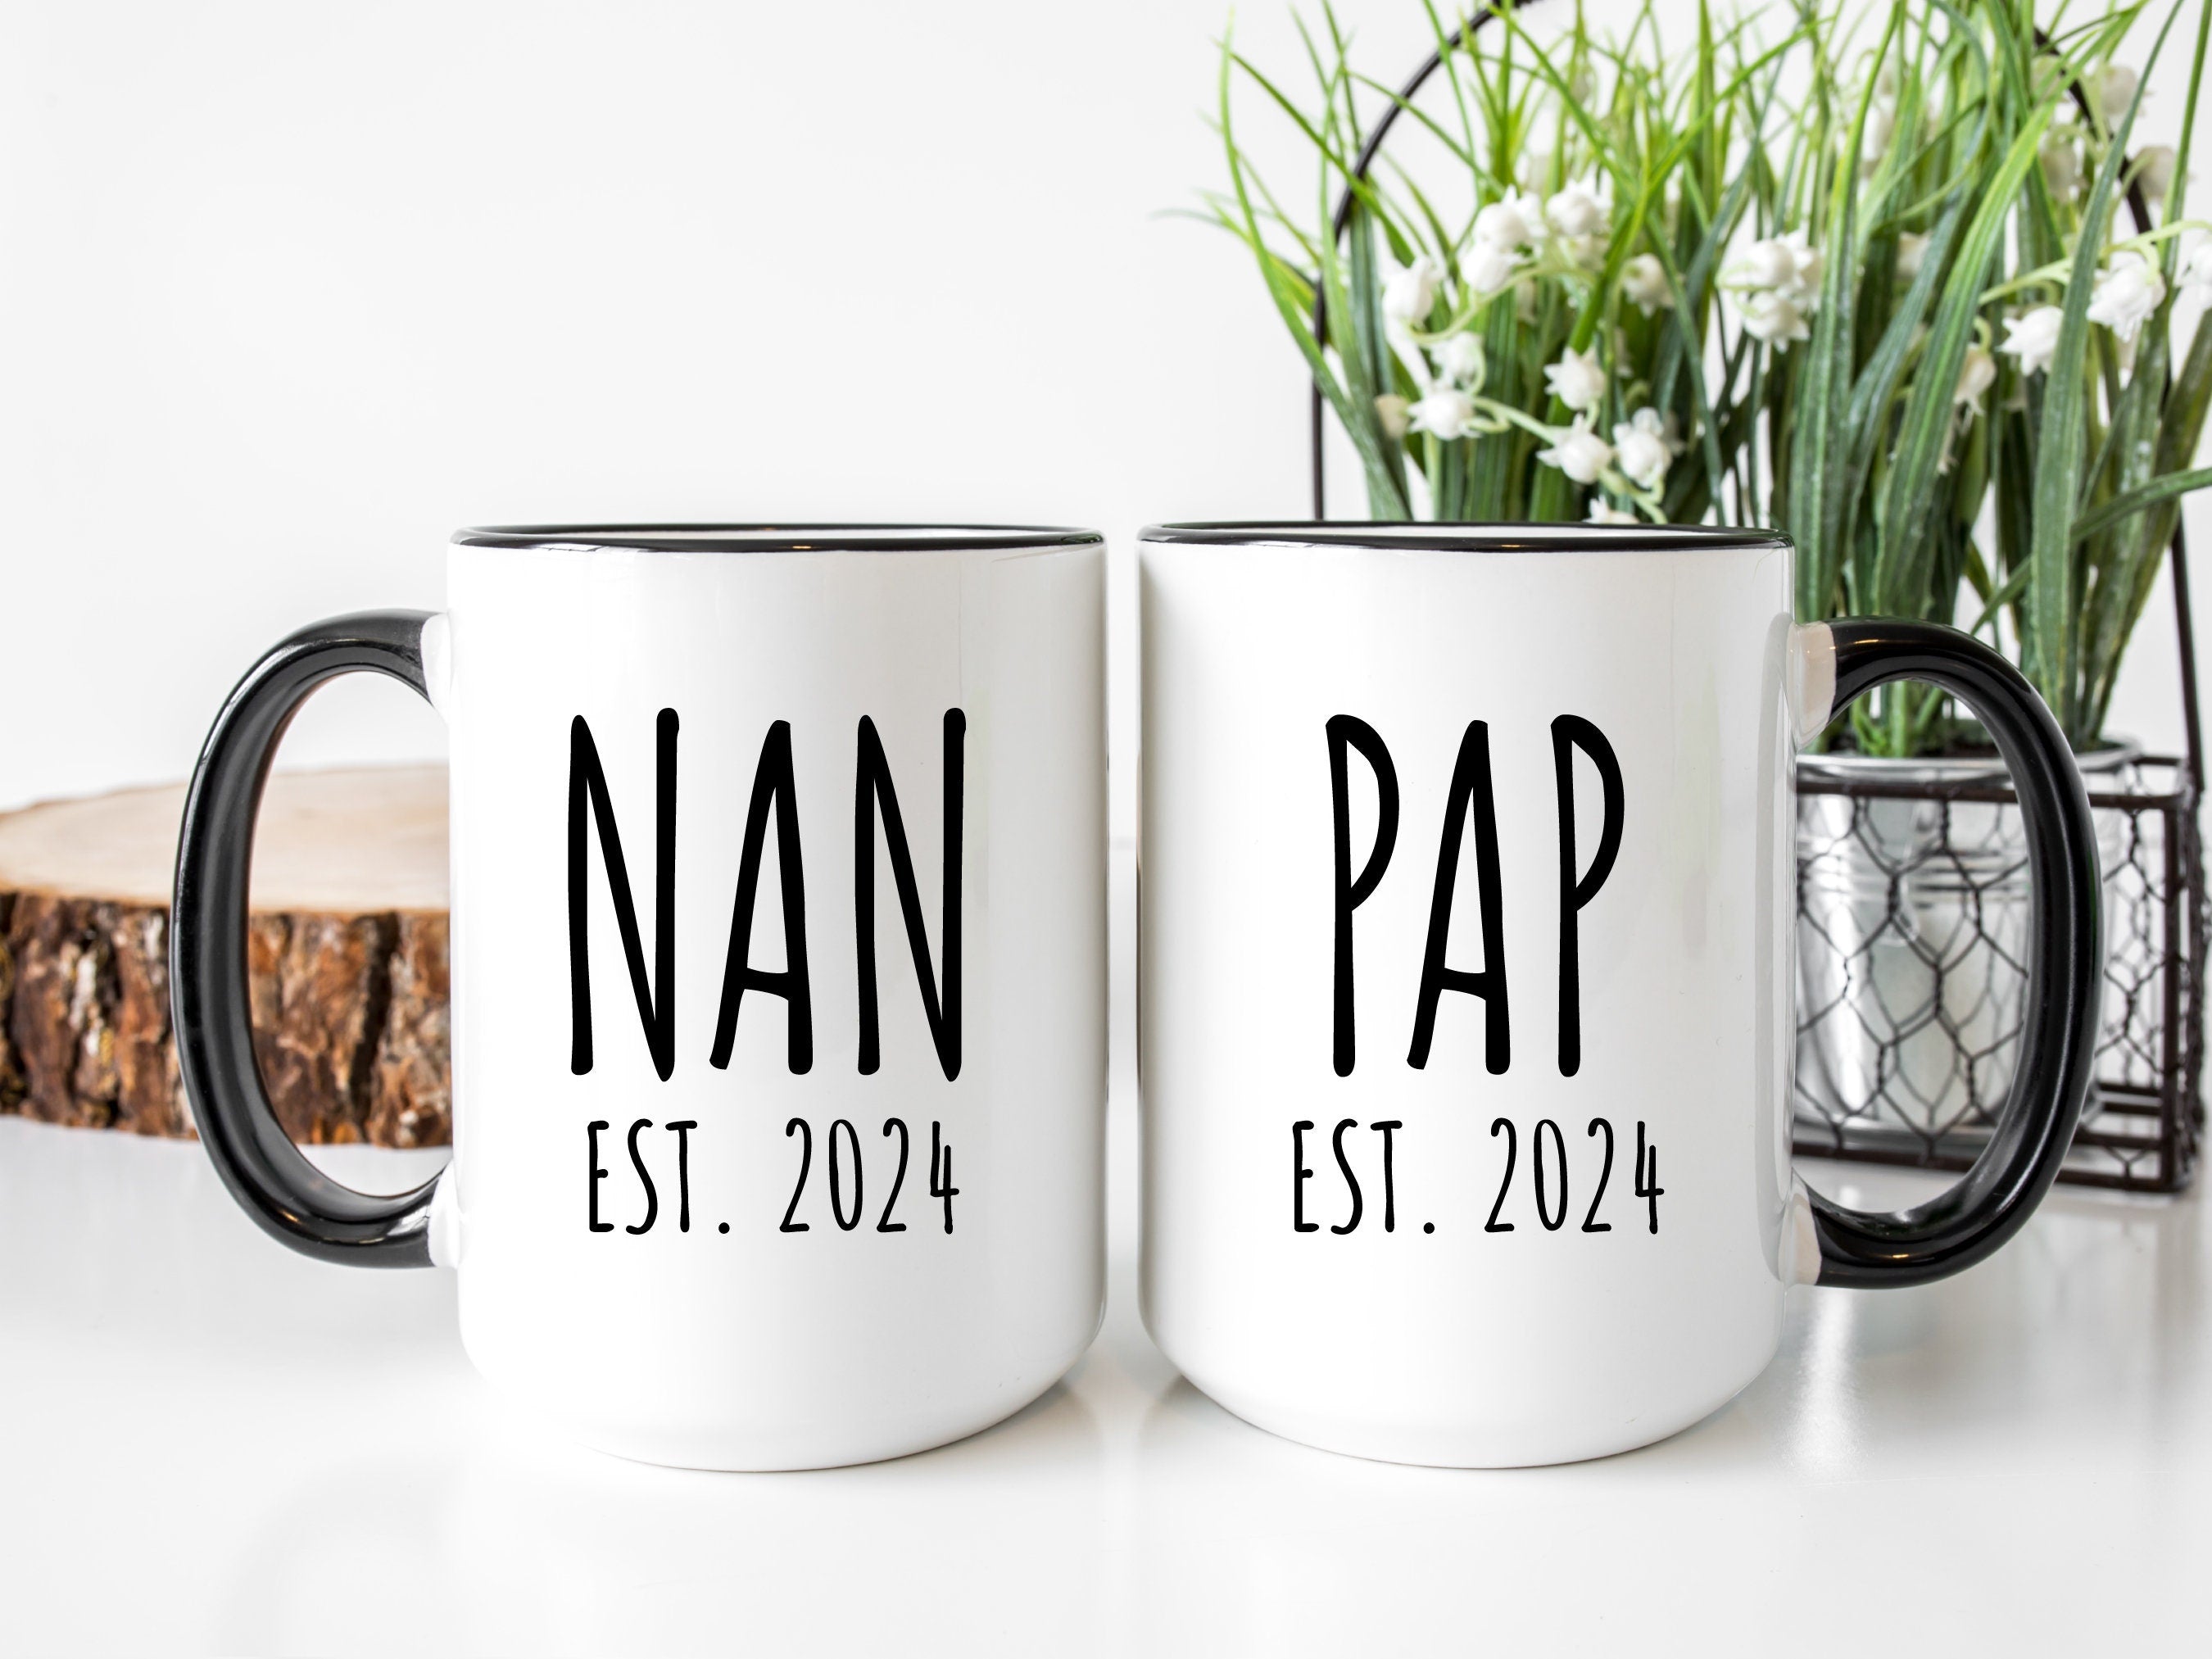 Nan and Pap Mug Set